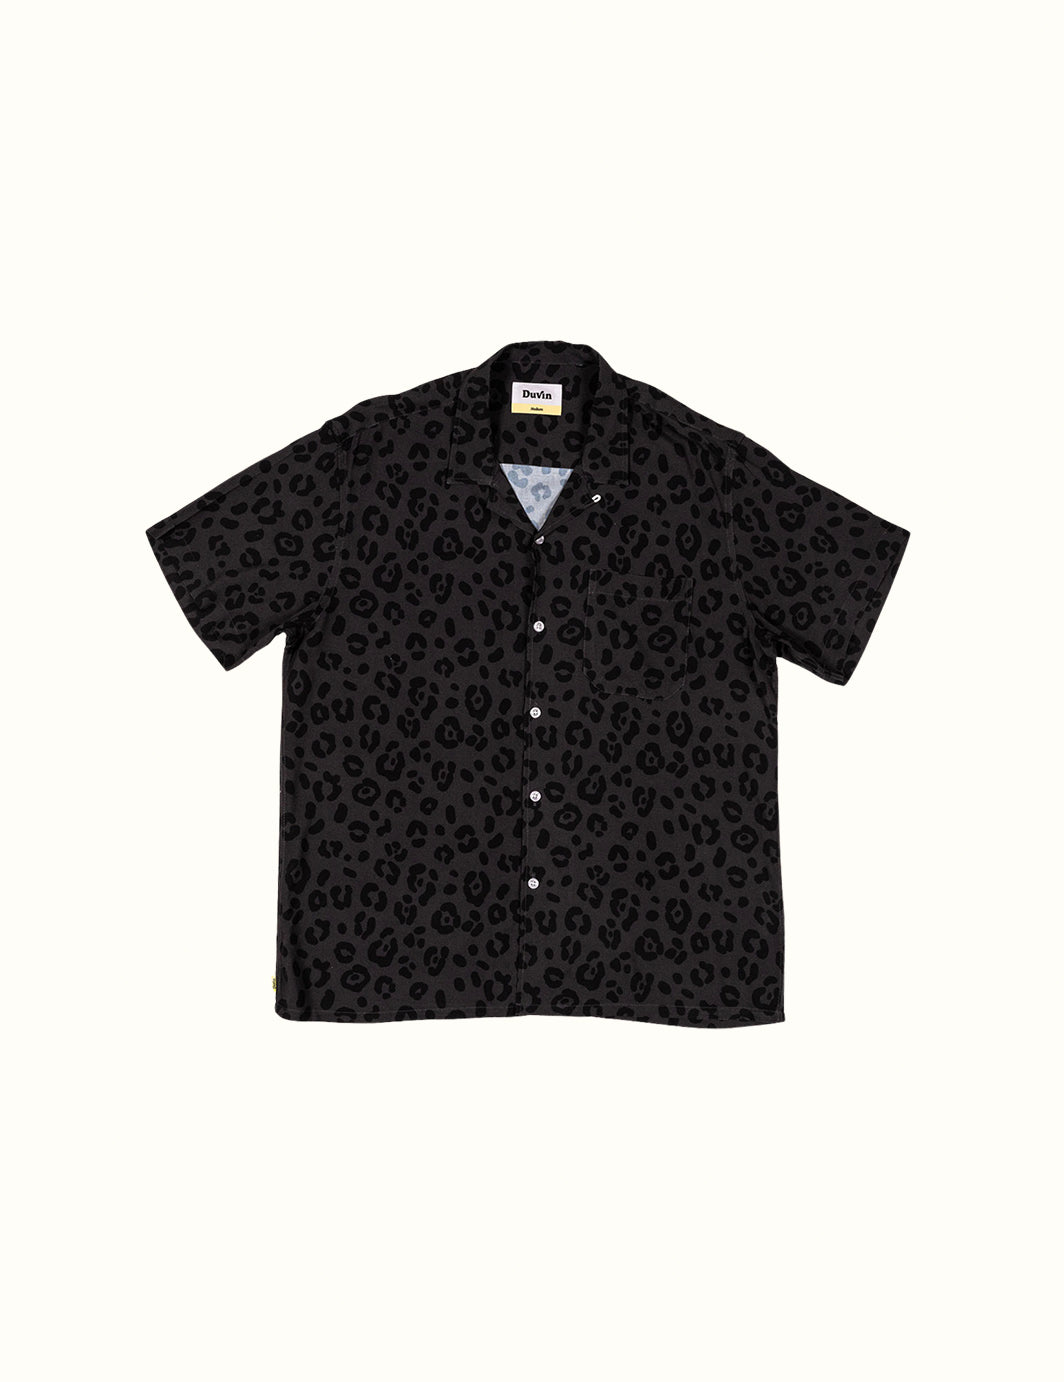 Black Leopard Buttonup Shirt